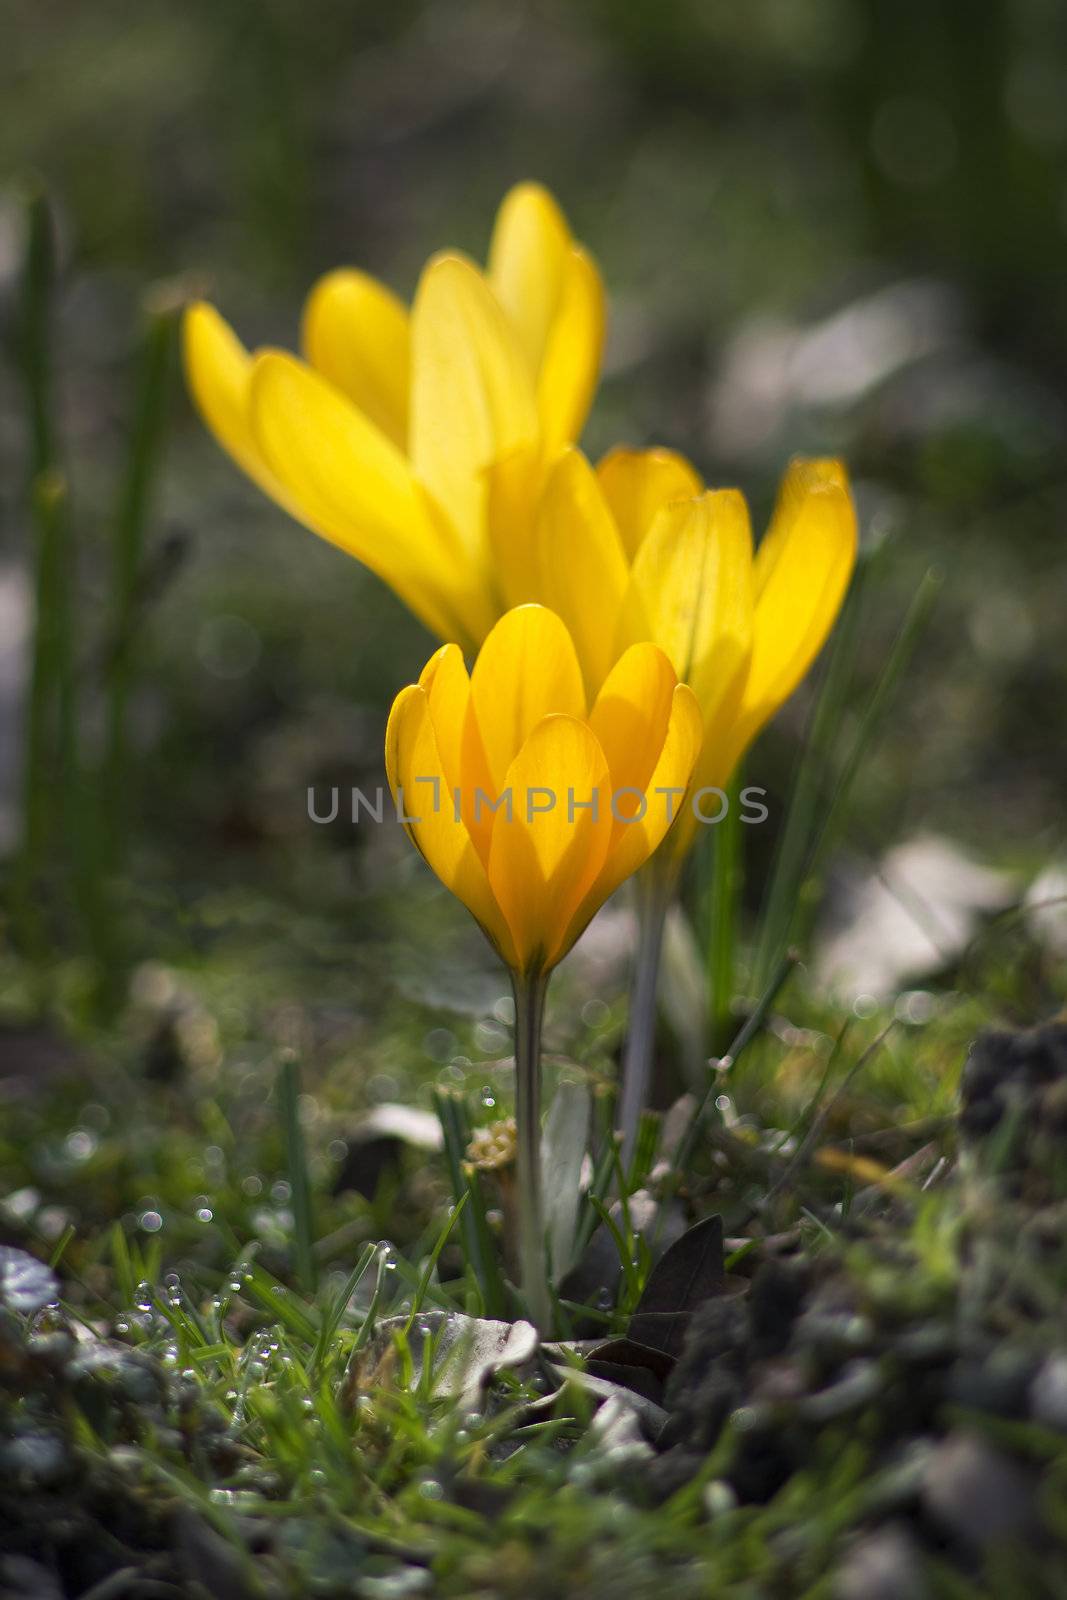 yellow crocus flowers in spring by miradrozdowski